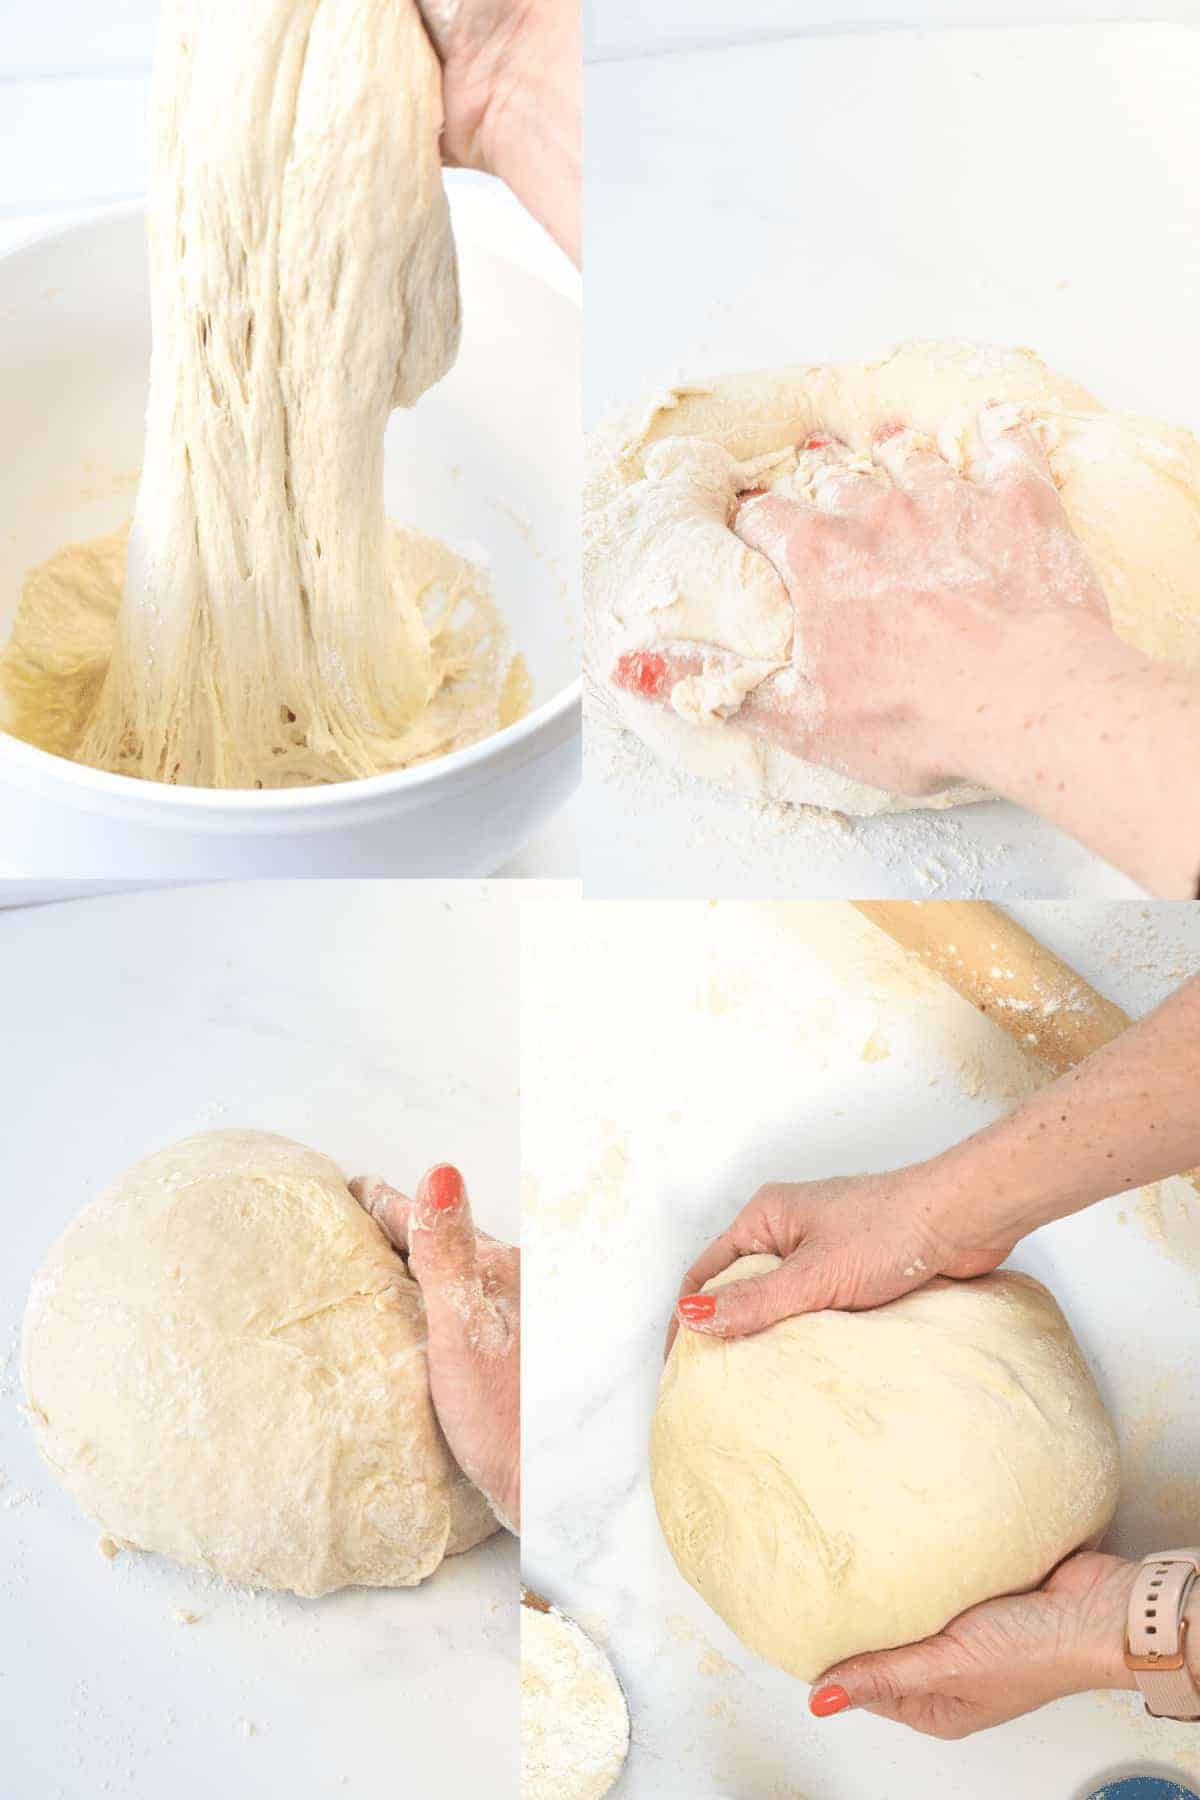 How to make vegan pizza dough